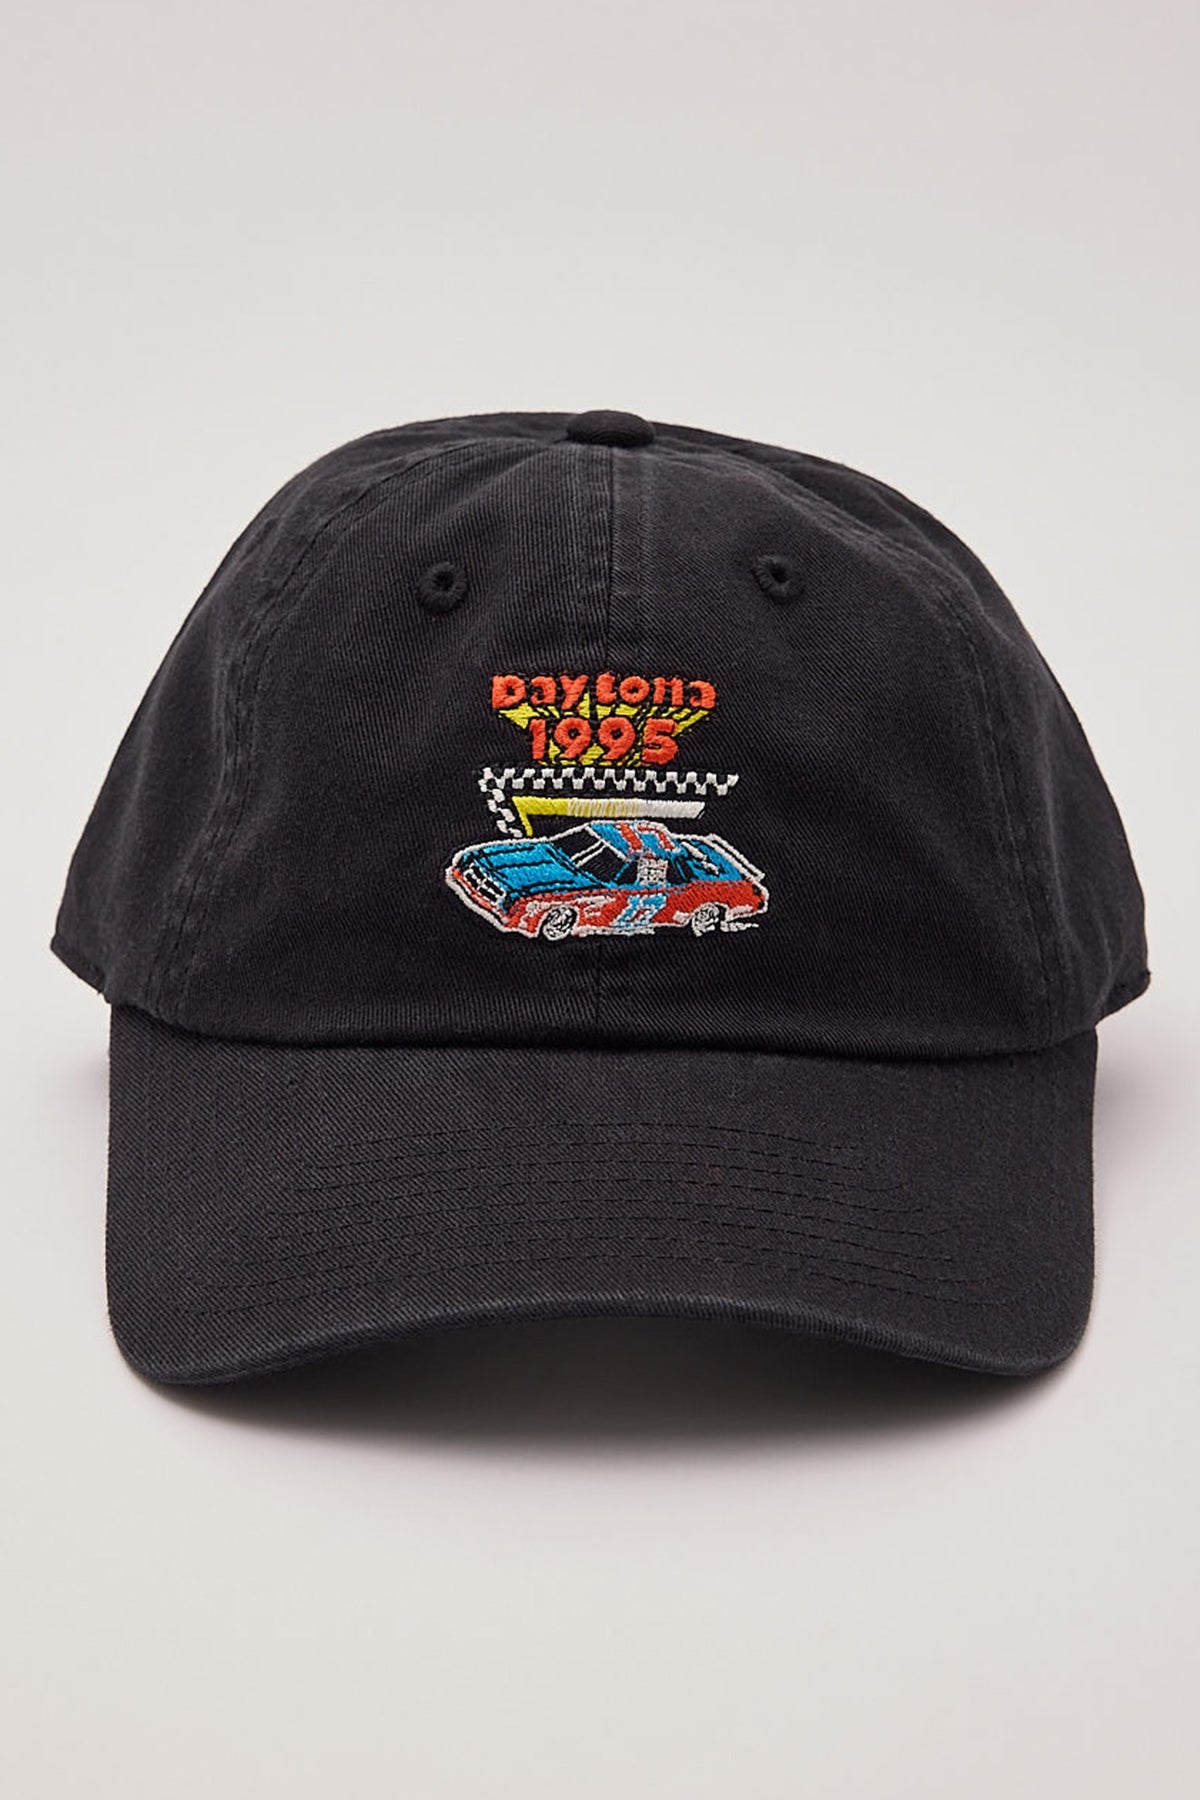 American Needle Daytona 1995 Ball Park Black